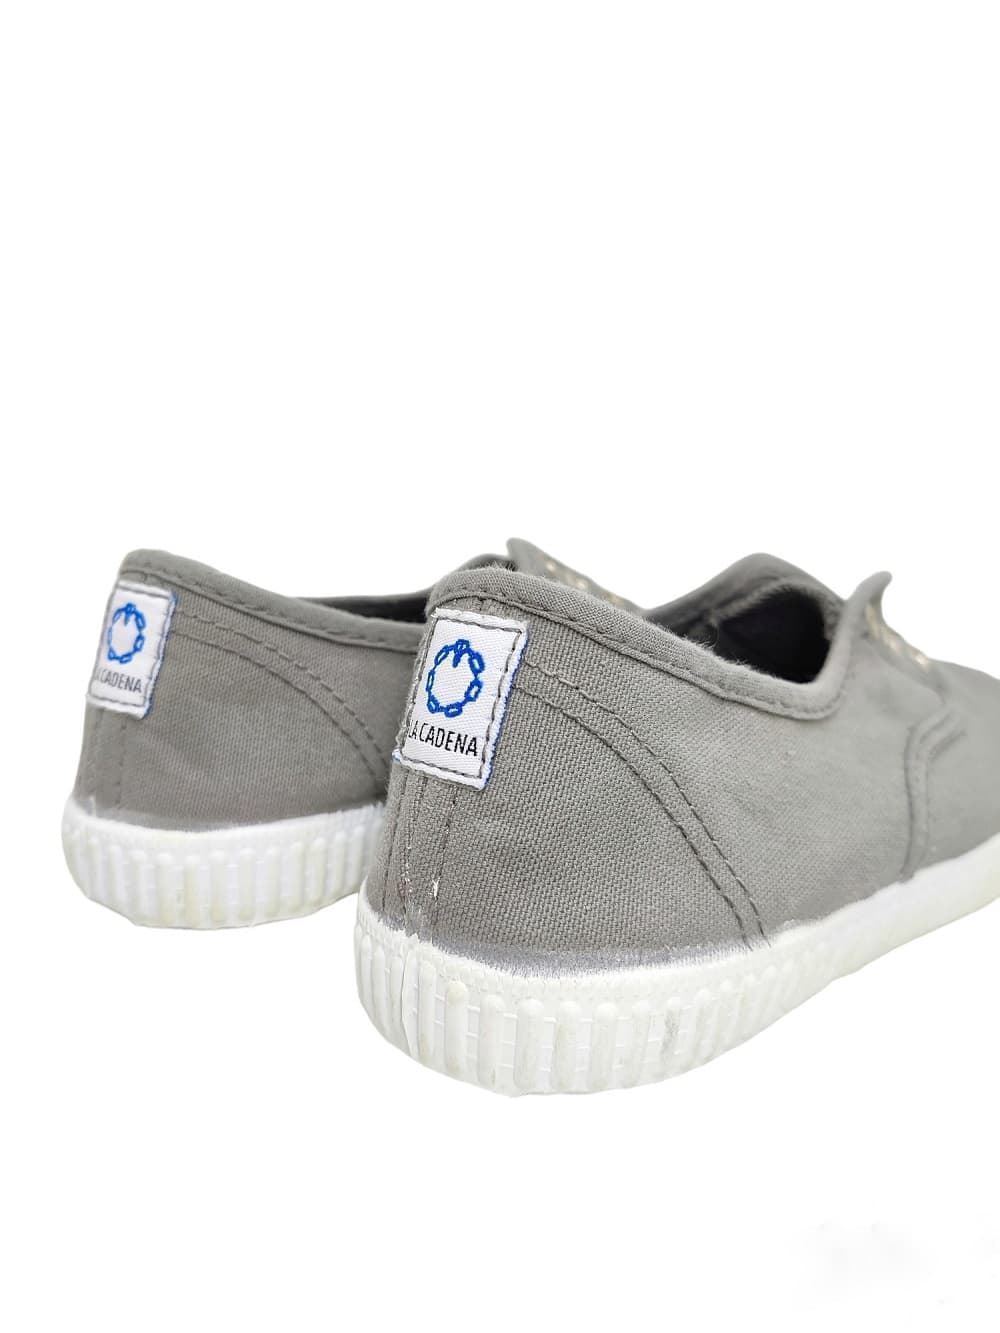 La Cadena Children's Sneakers Gray Canvas with Toe - Image 3